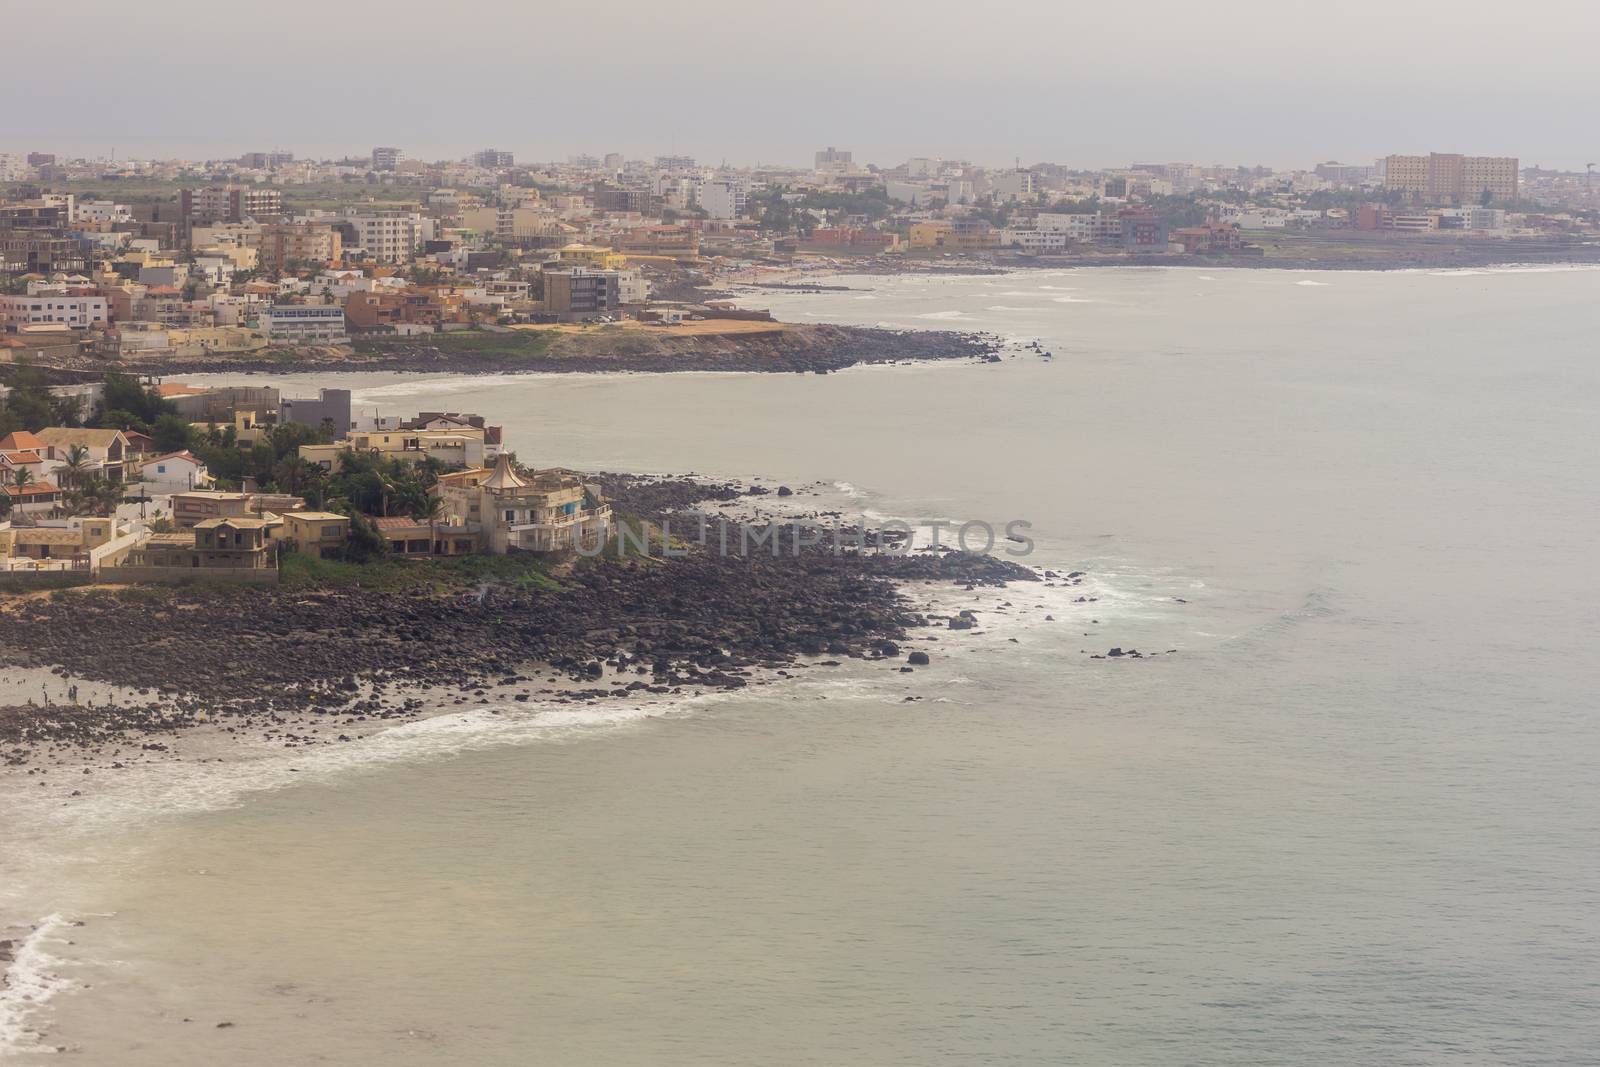 Aerial view of Dakar by derejeb